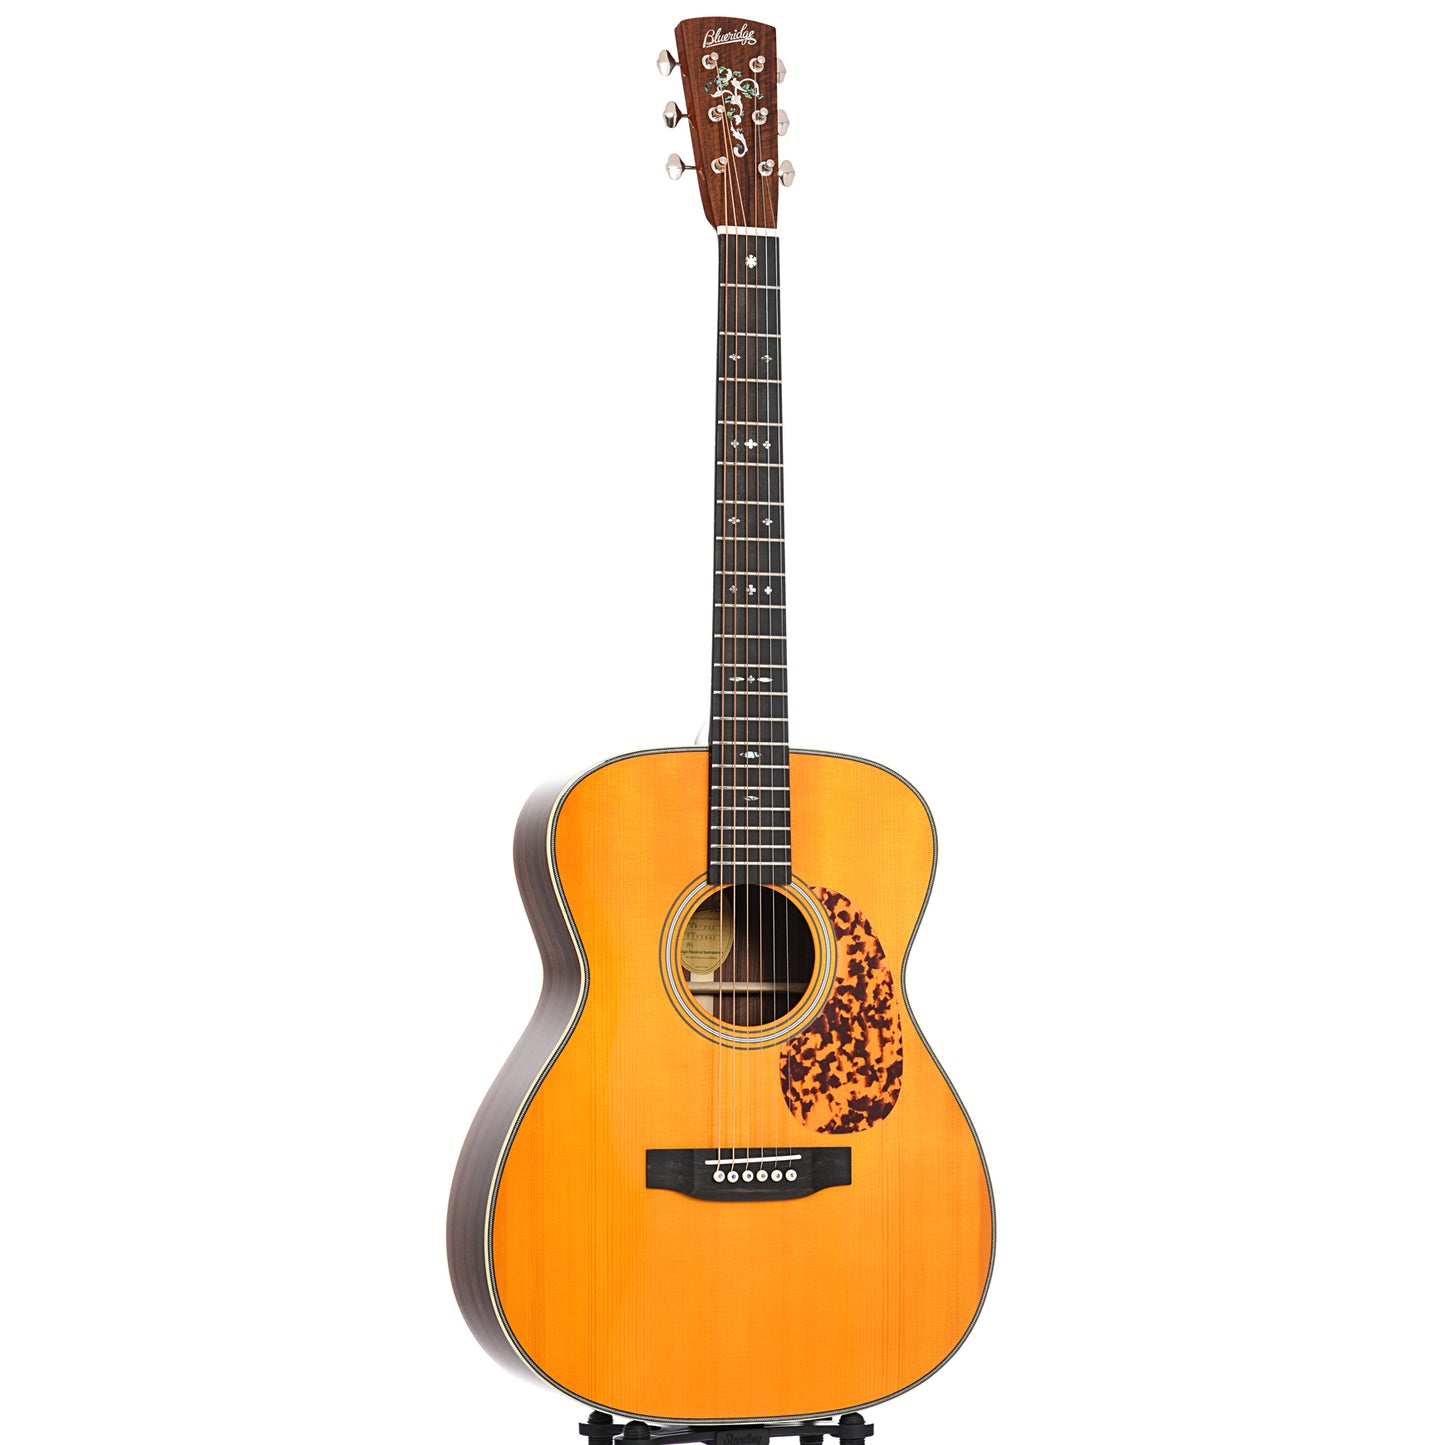 Full front and side of Blueridge Prewar Series BR-263 000 Acoustic Guitar